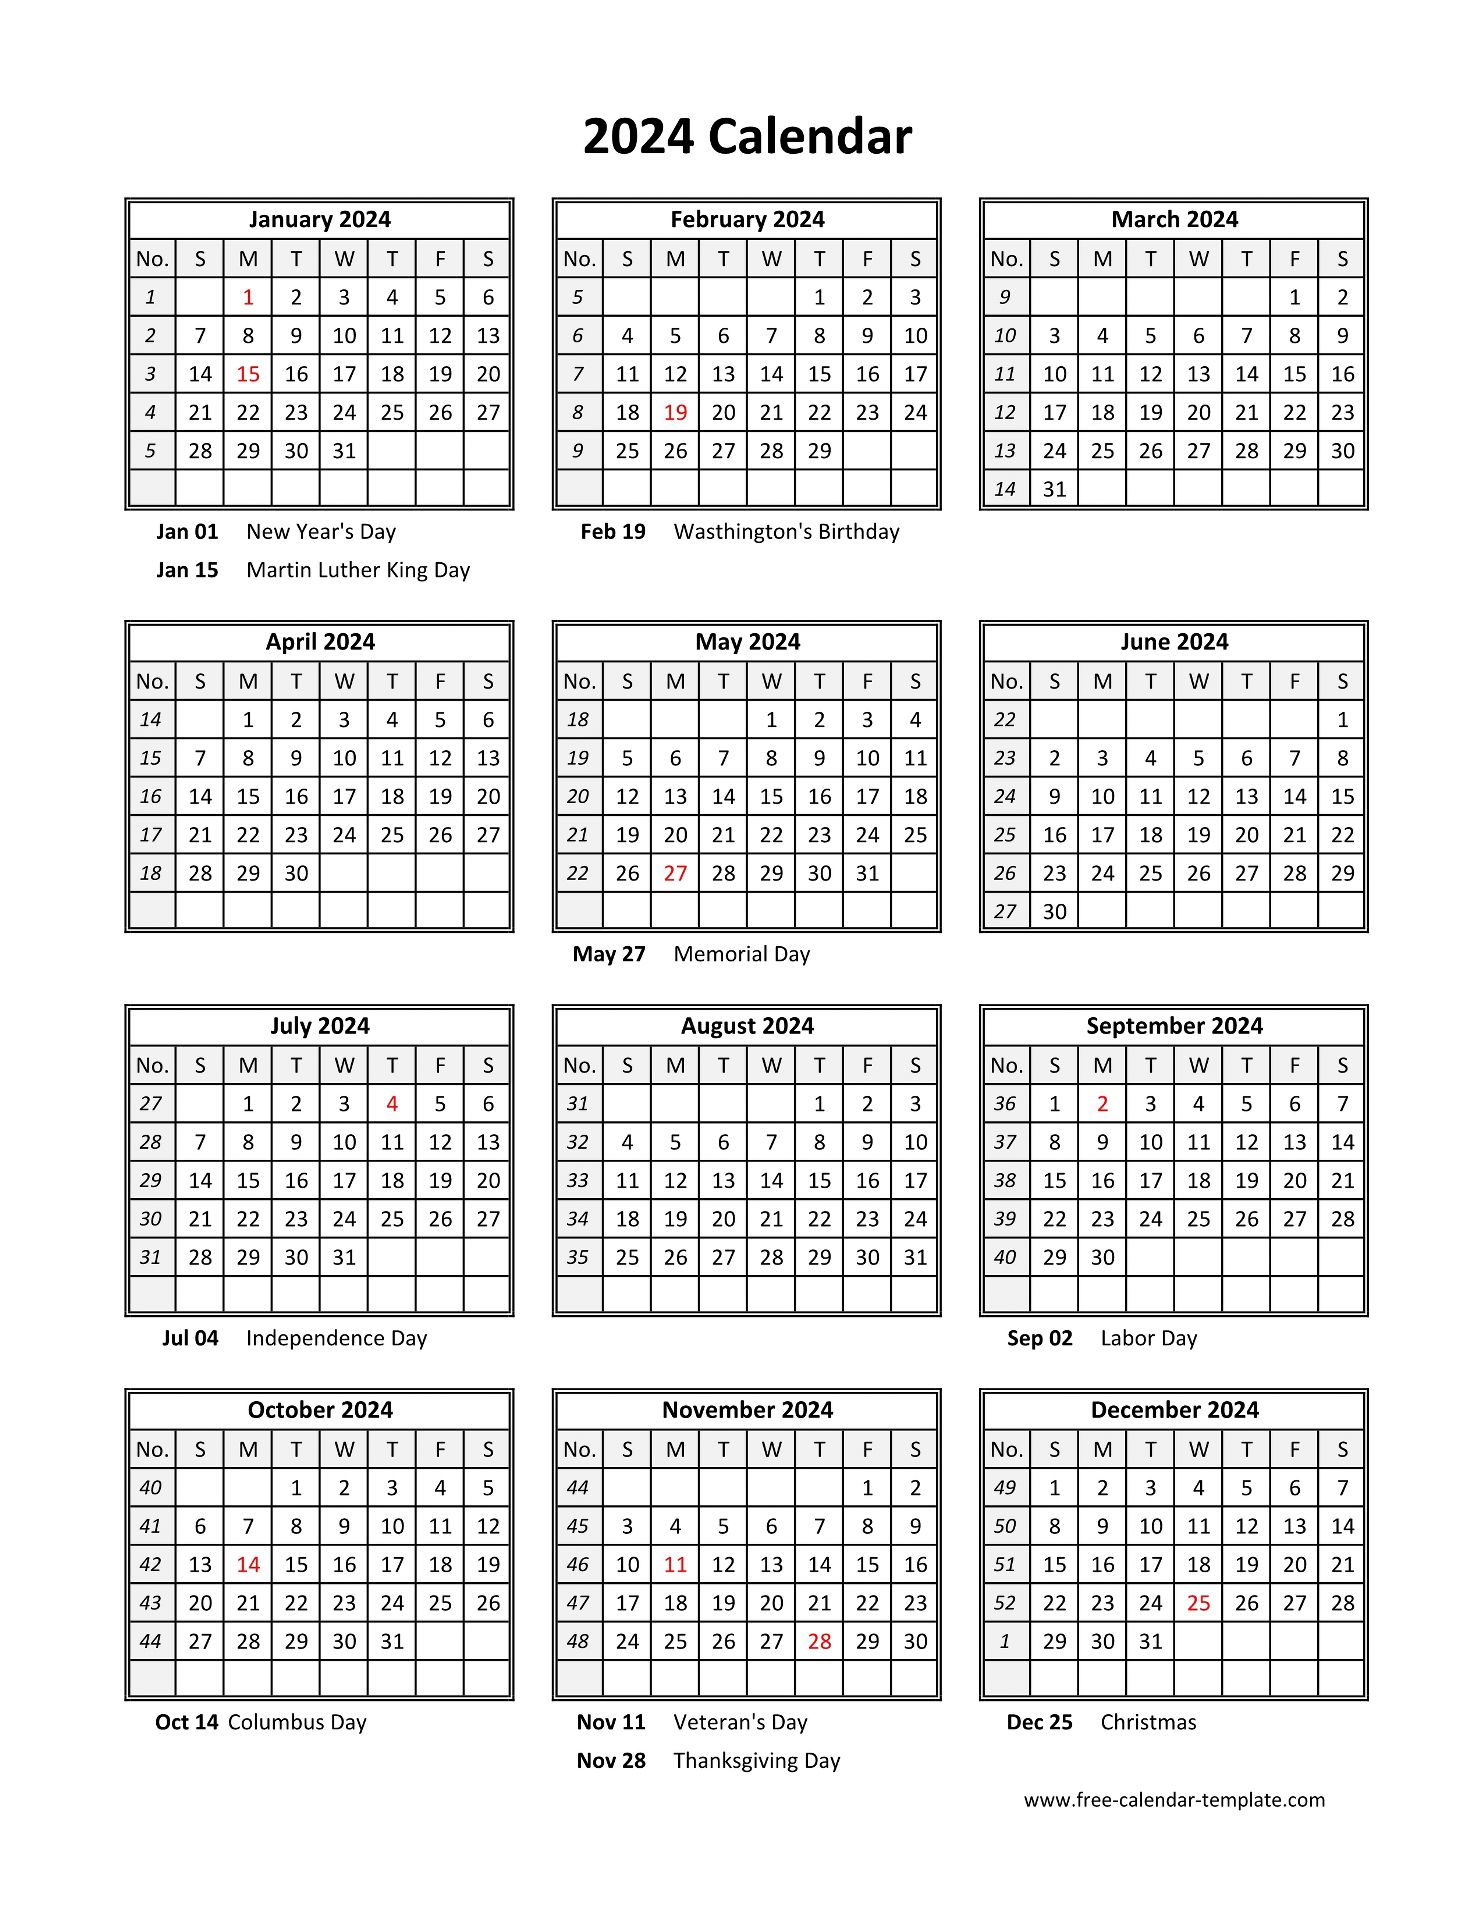 2024 Printable Calendar One Page Pdf Downloader Chery Deirdre